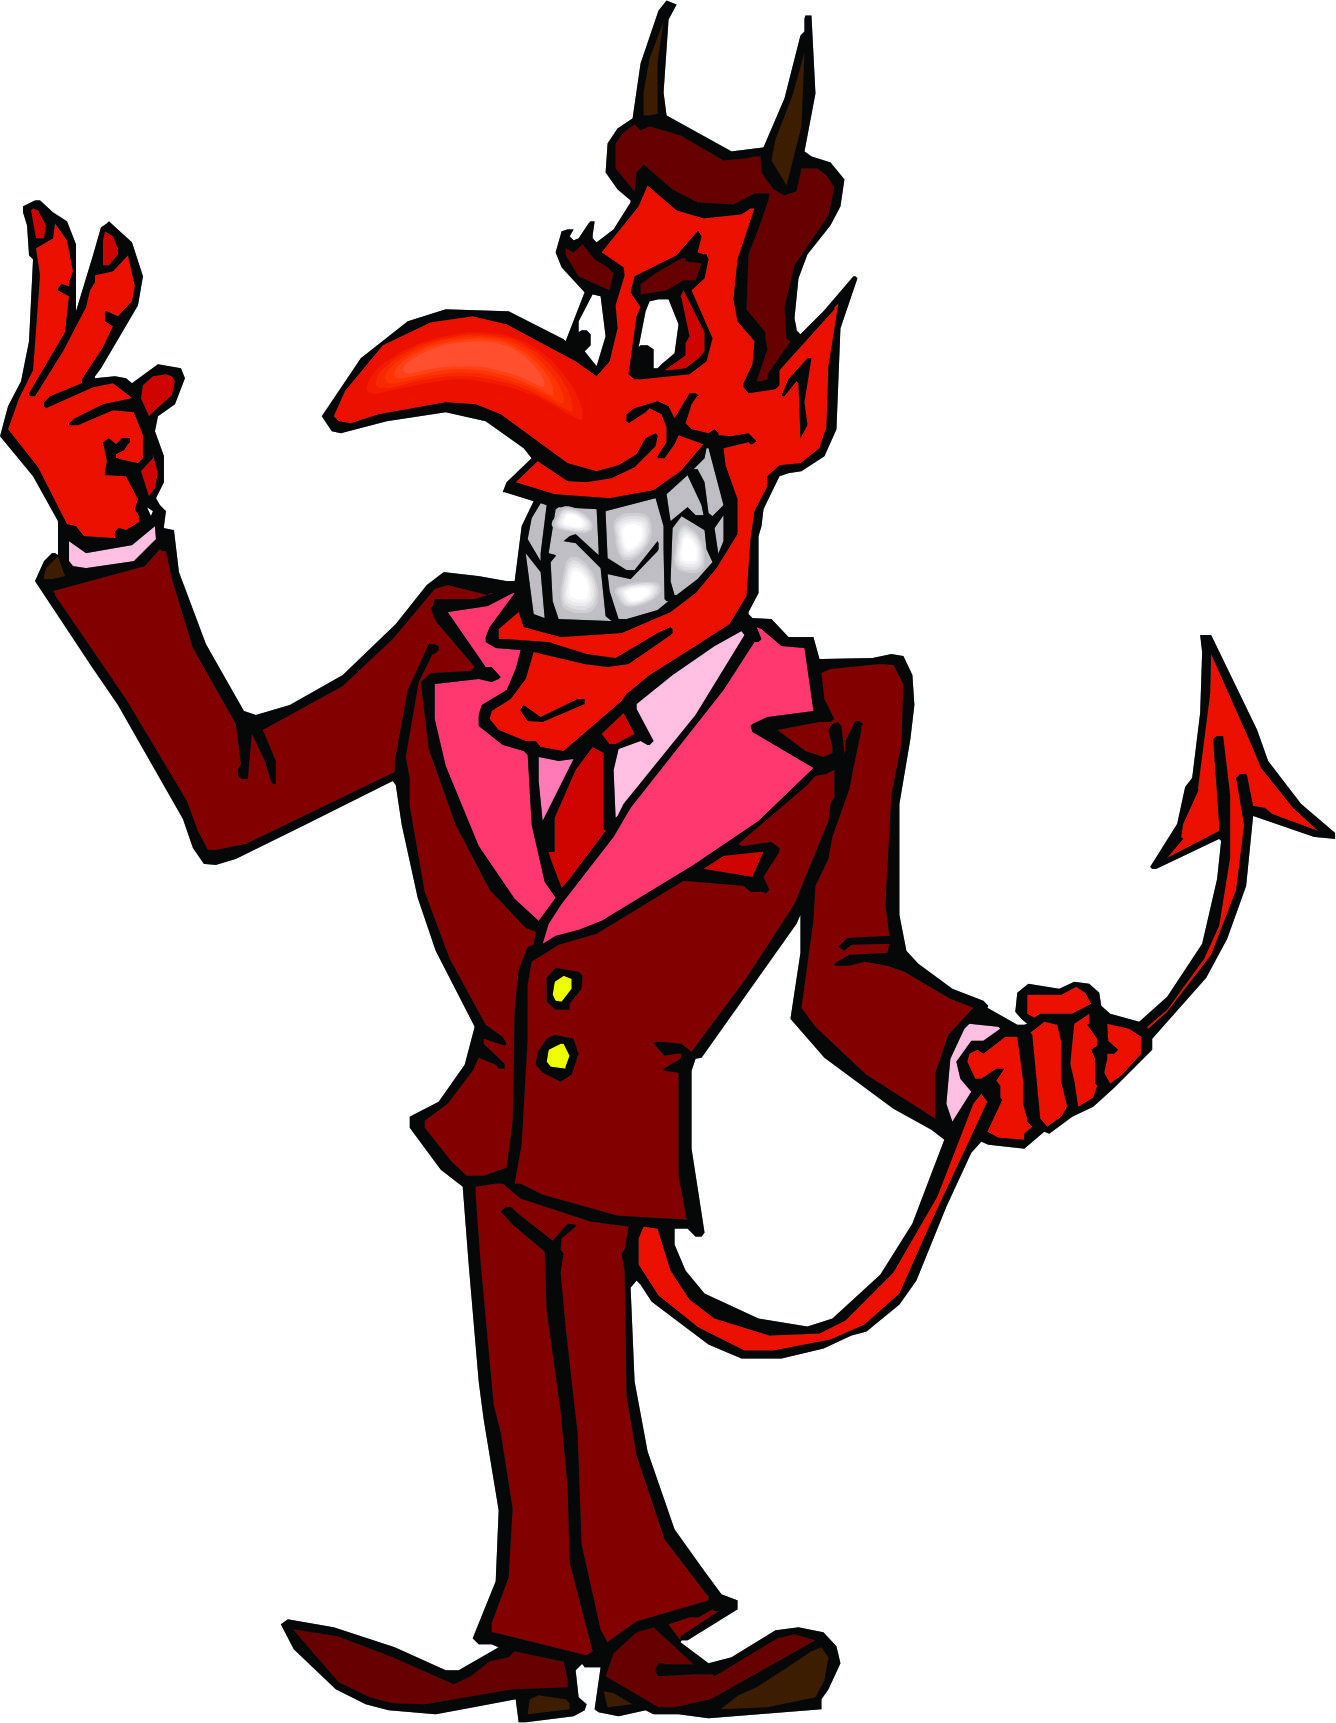 Bad clipart bad guy. Cartoon devil pencil and